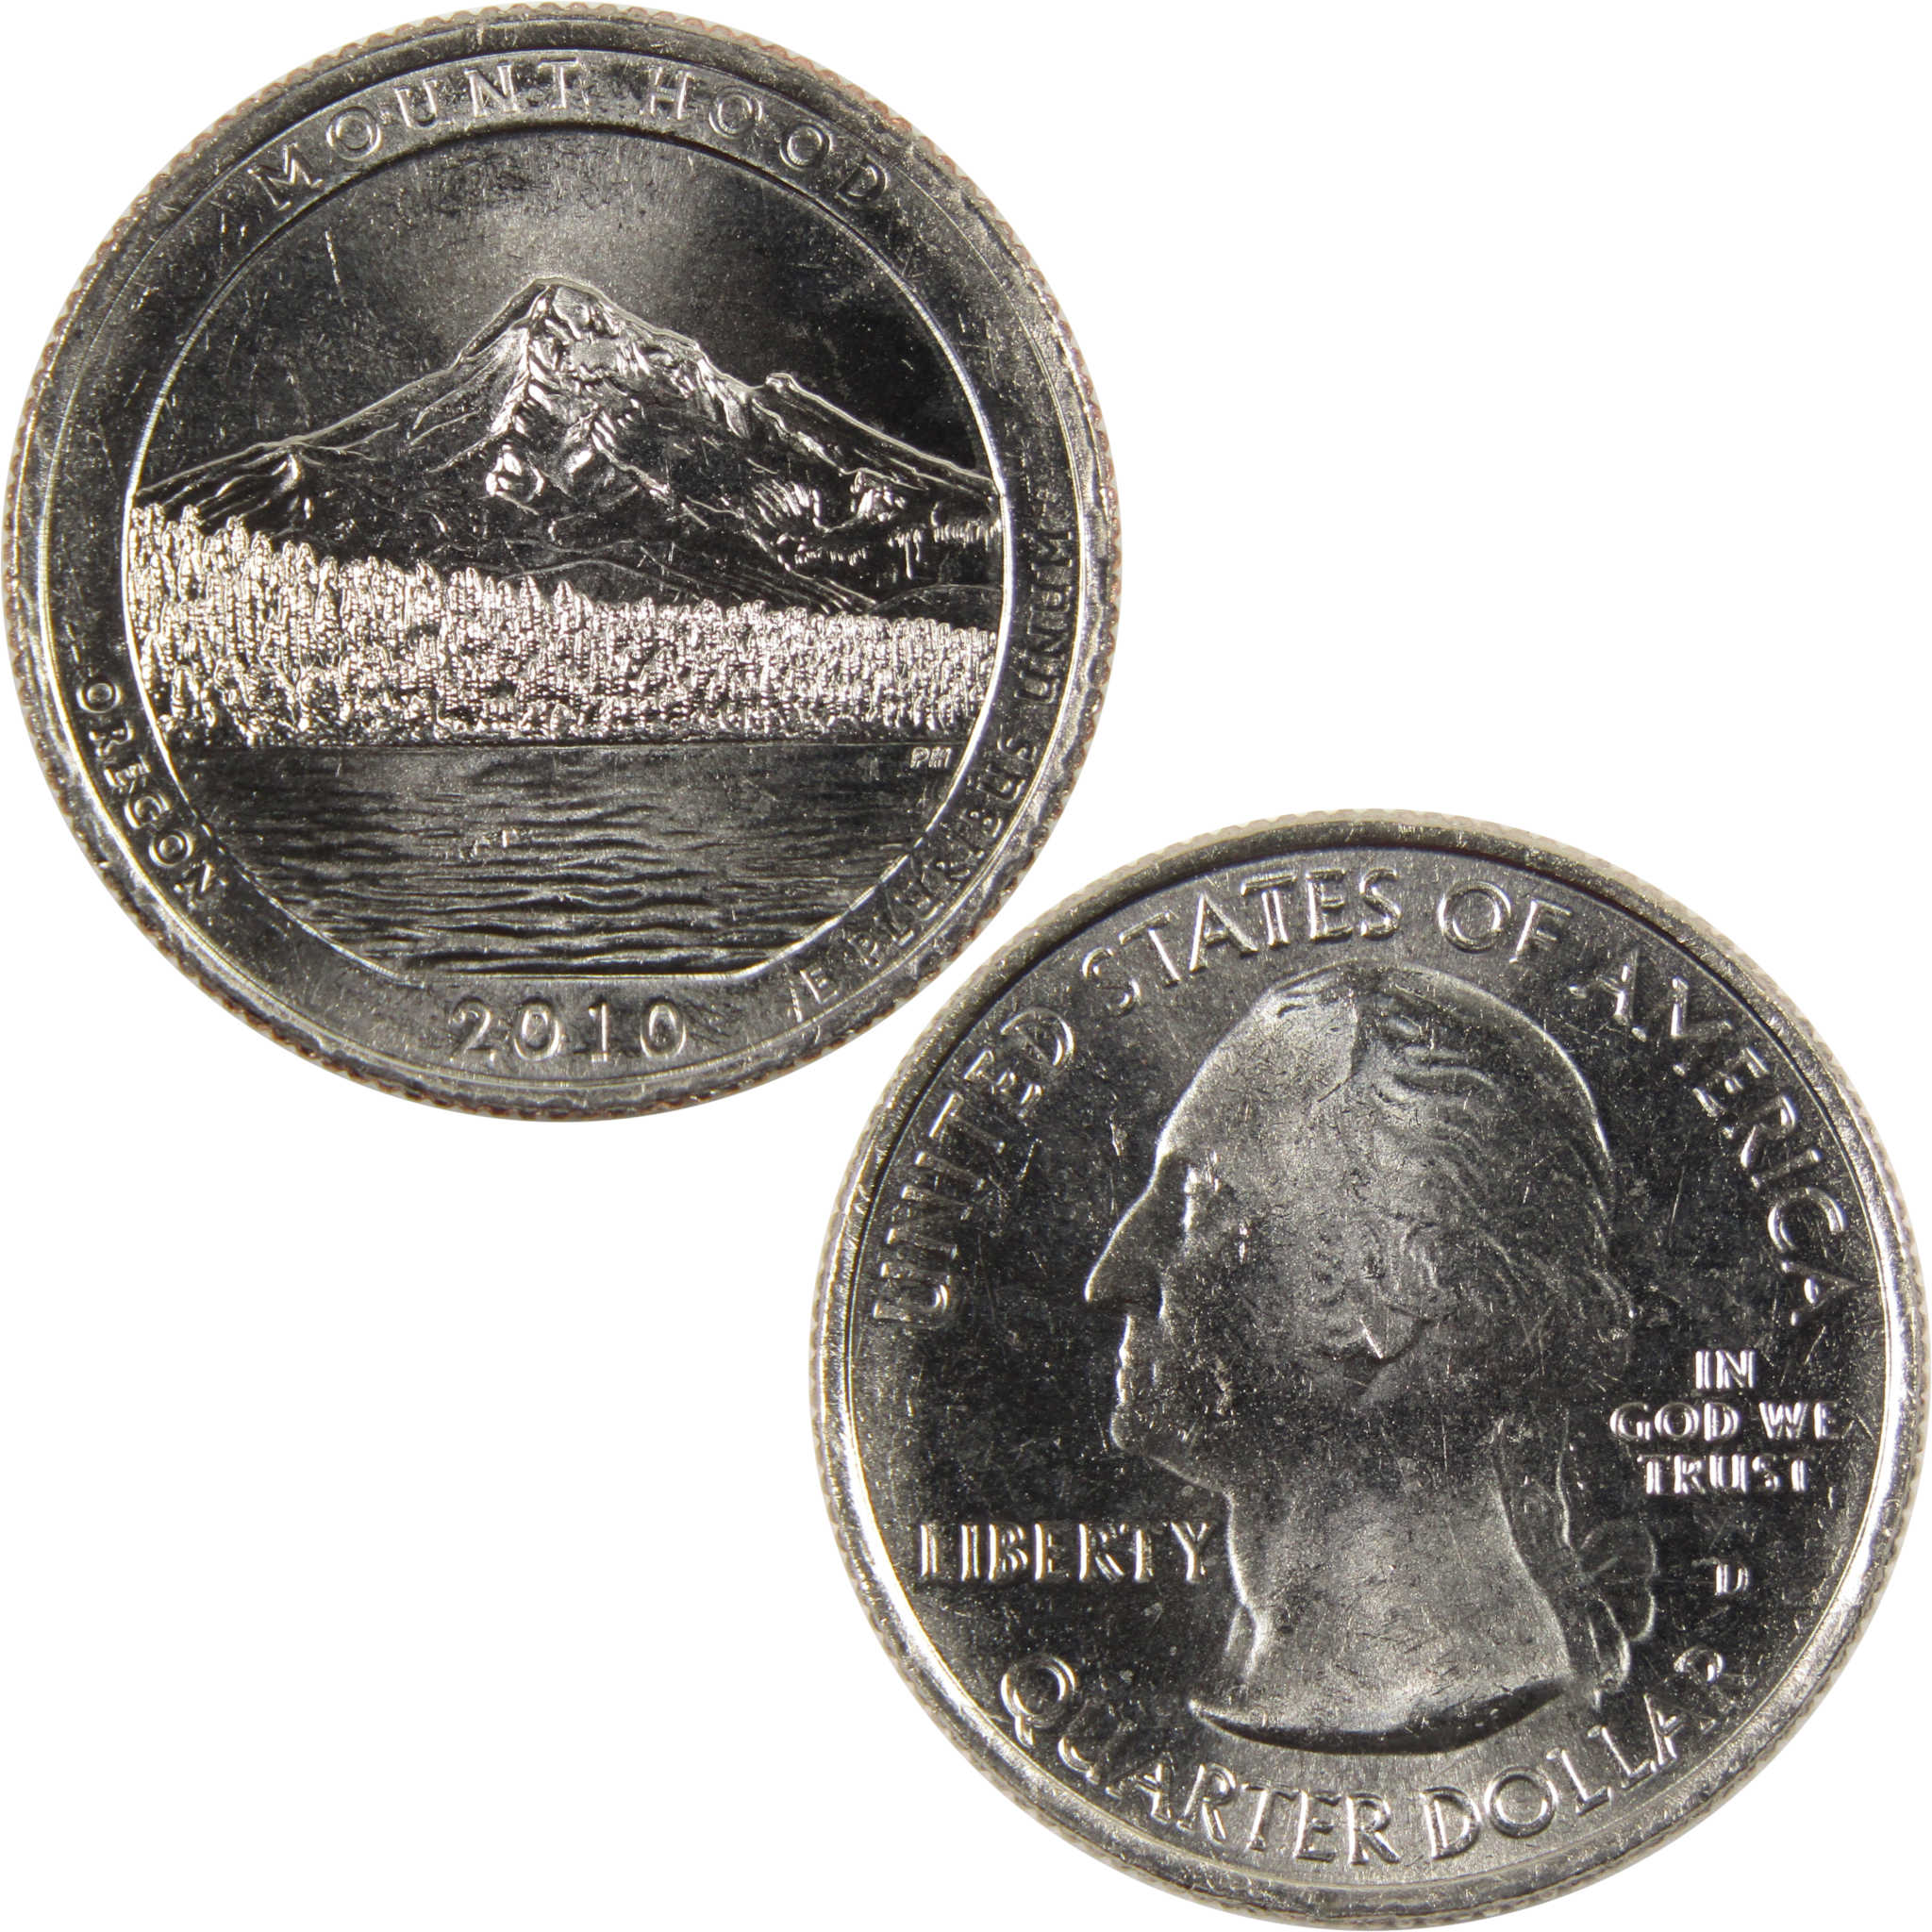 2010 D Mount Hood National Park Quarter BU Uncirculated Clad 25c Coin